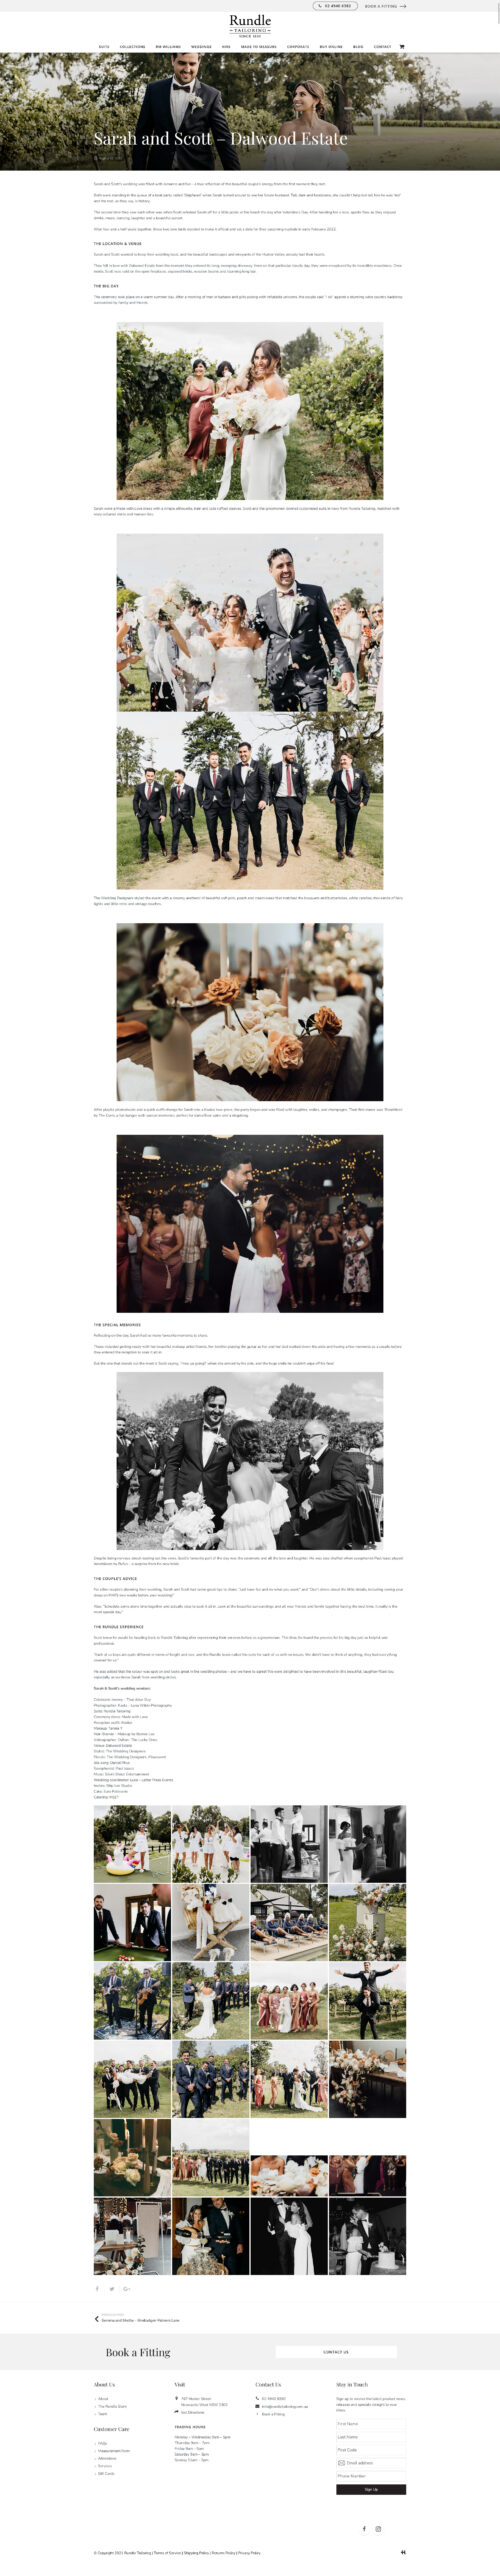 Screenshot of blog for Sarah and Scott's wedding